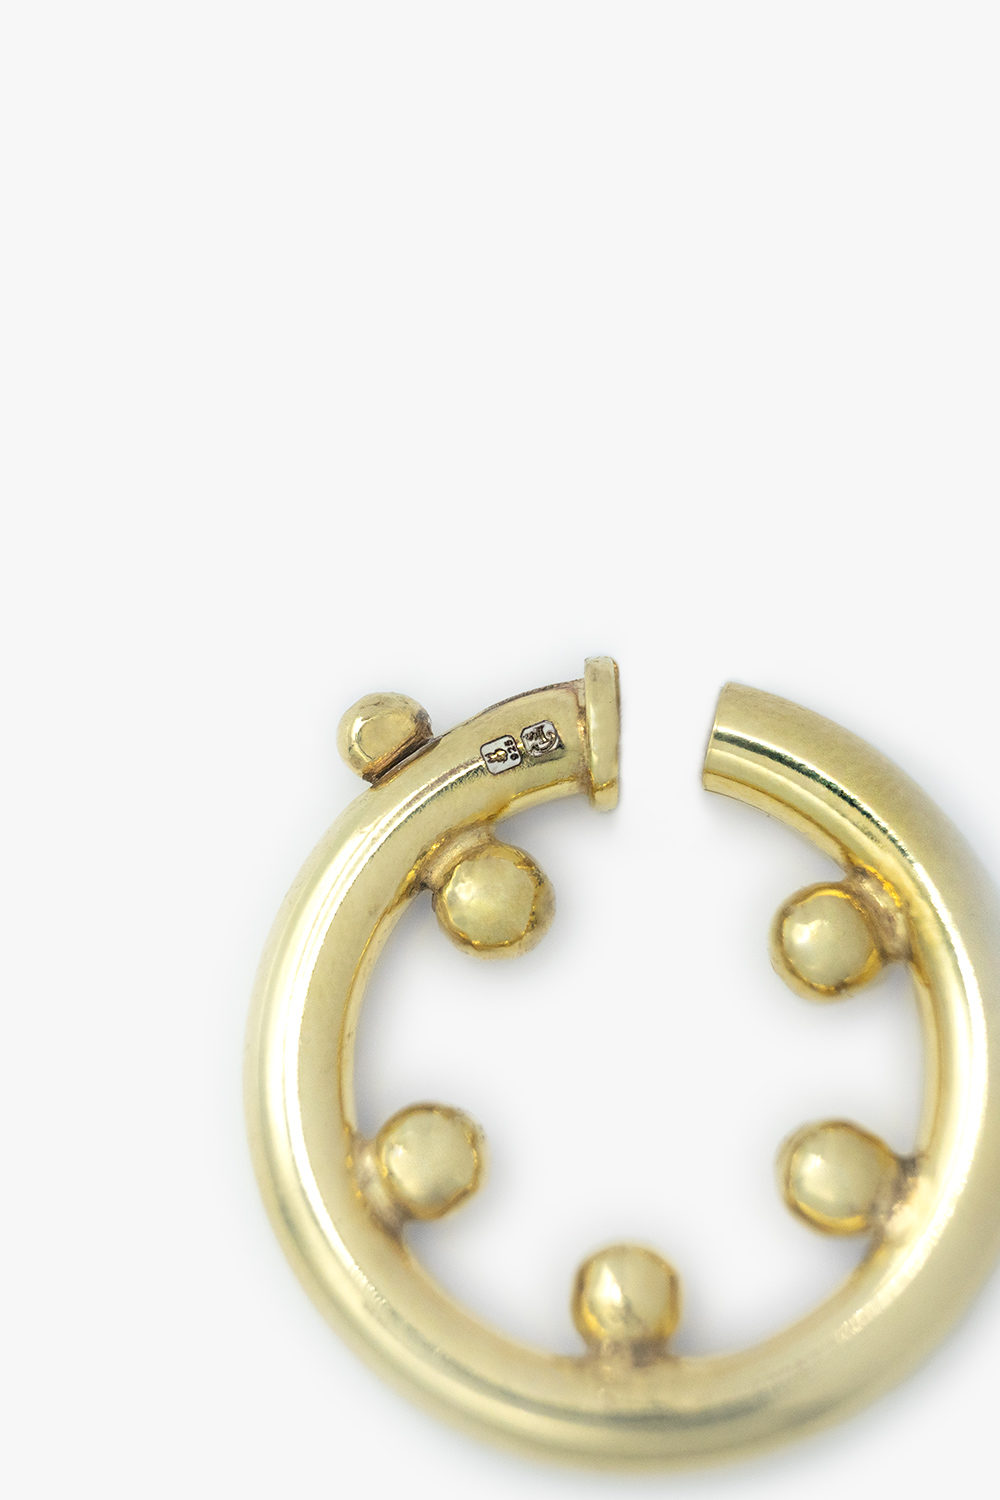 Jewellery Concept: Lock Moges Dourado